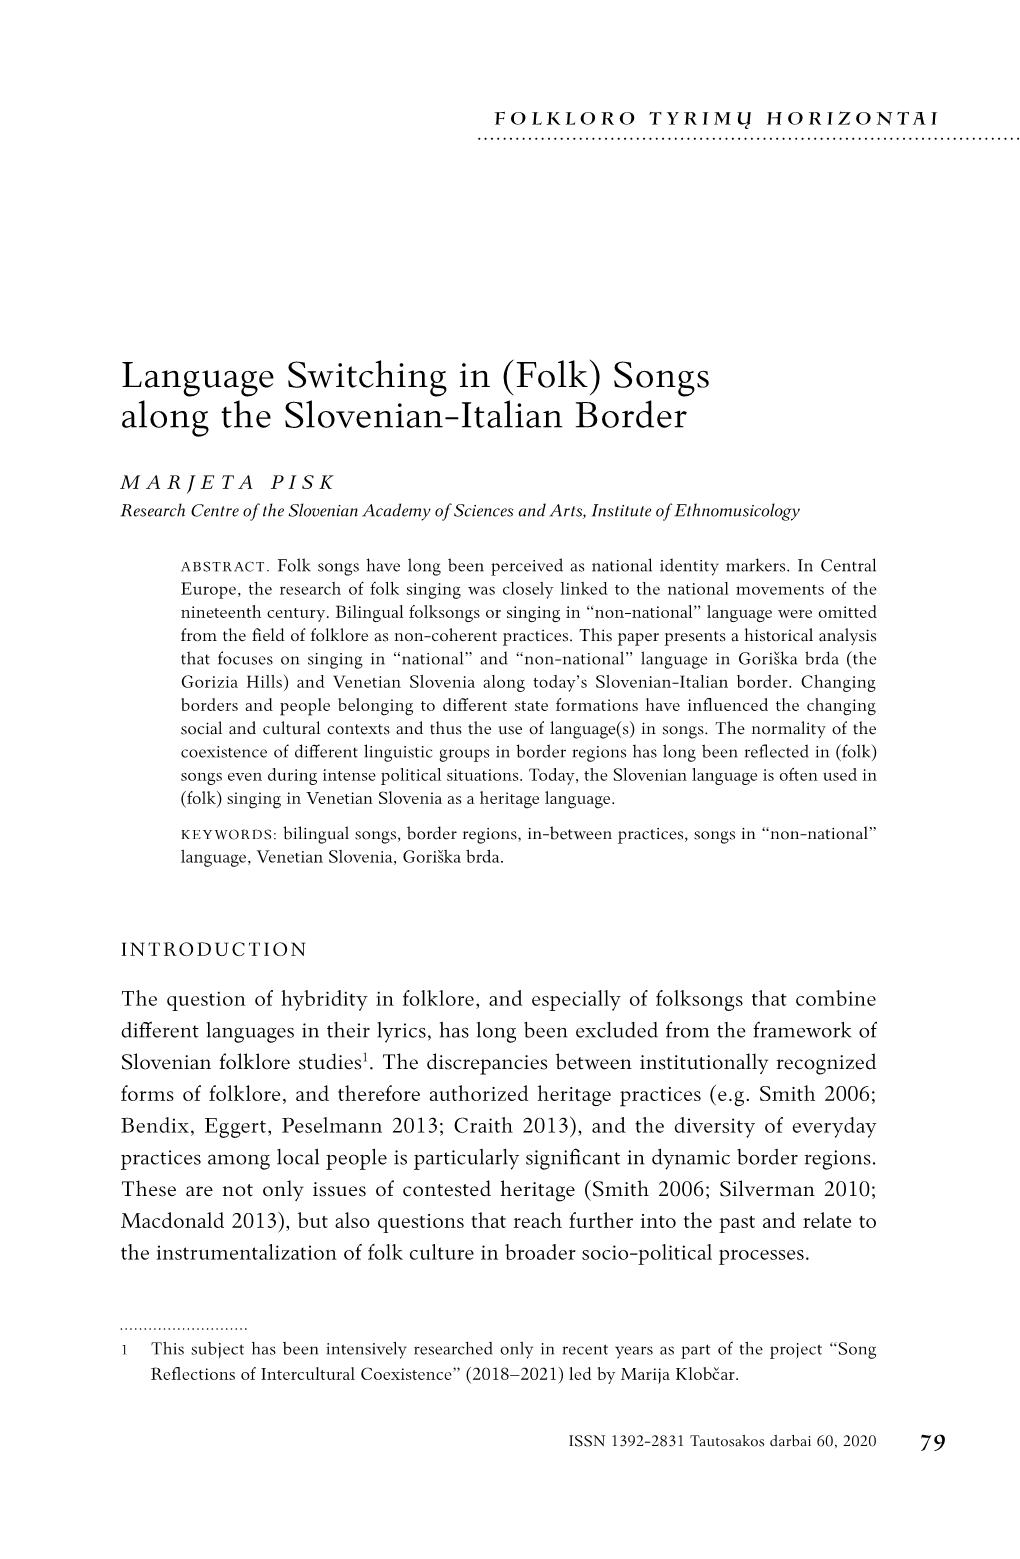 Language Switching in (Folk) Songs Along the Slovenian-Italian Border